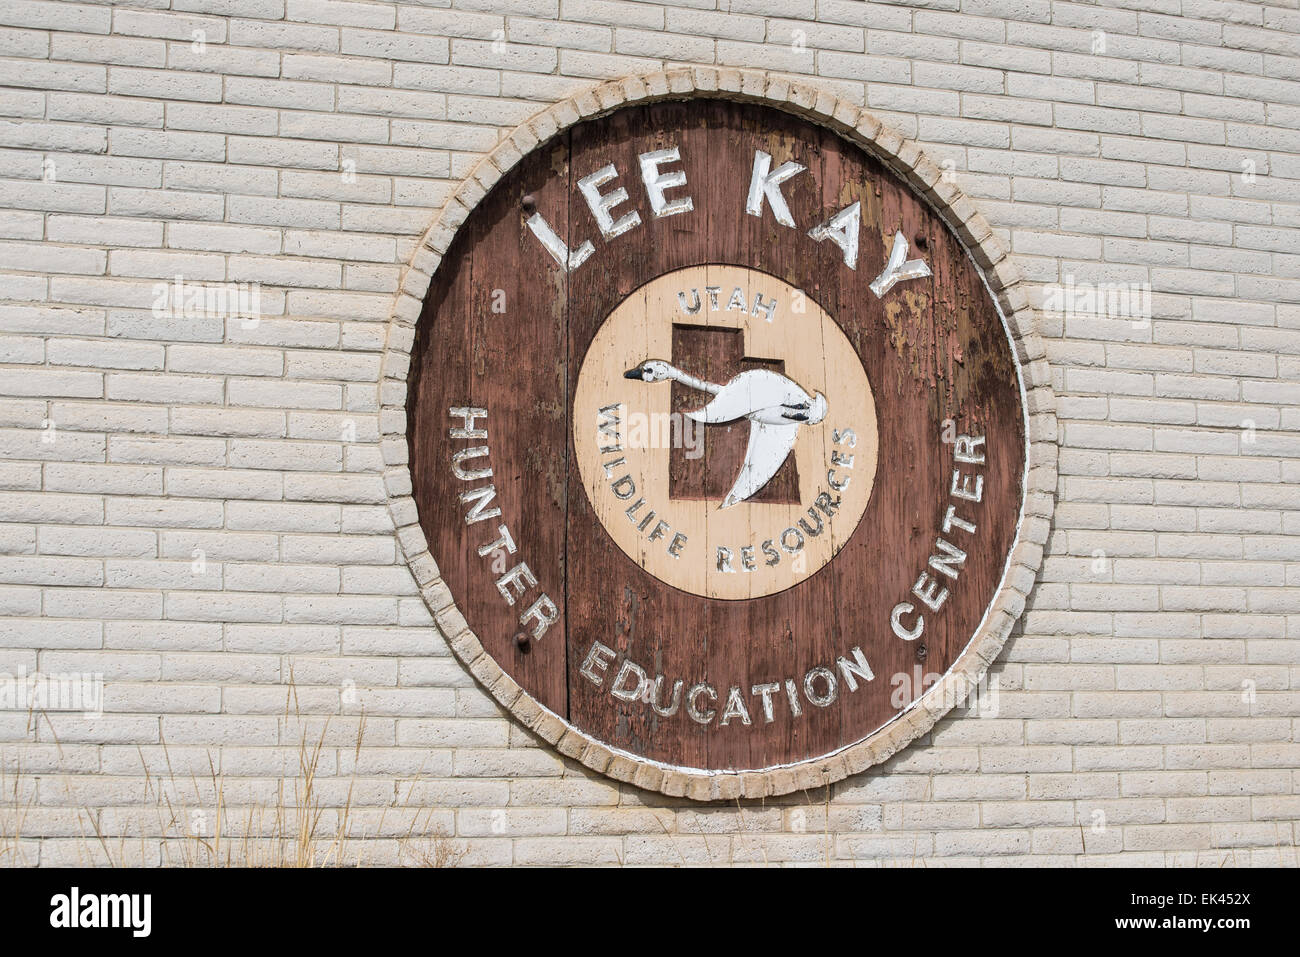 Lee Kay Hunter Education Center and Gun Range, Salt Lake City, Utah Stock Photo